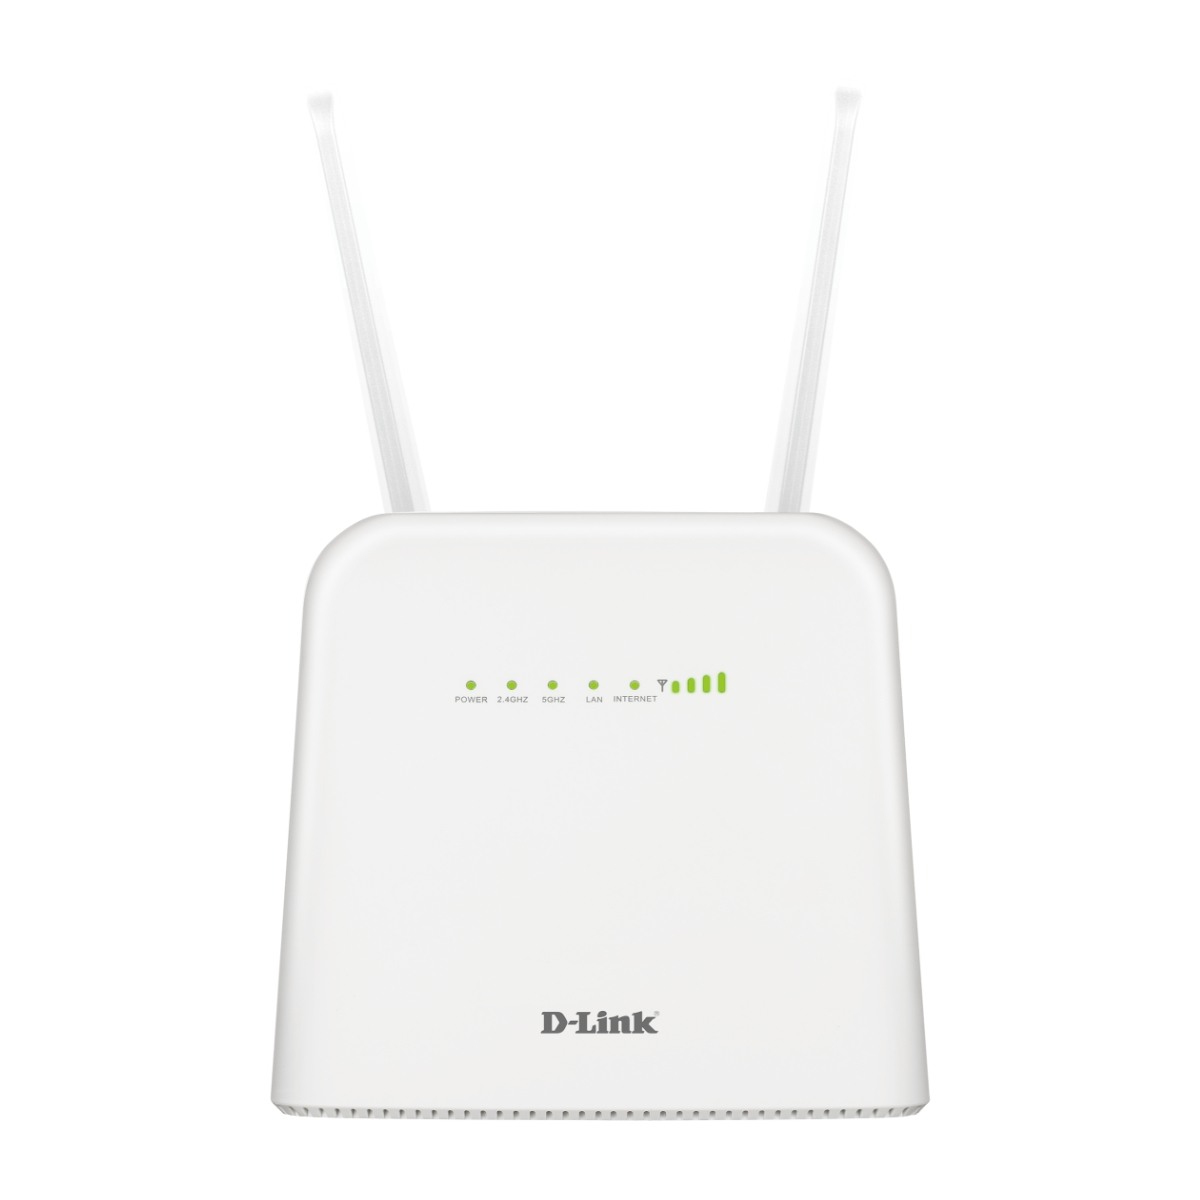 D-Link DWR-960/W CAT7 Wi-Fi AC1200 4G/LTE router